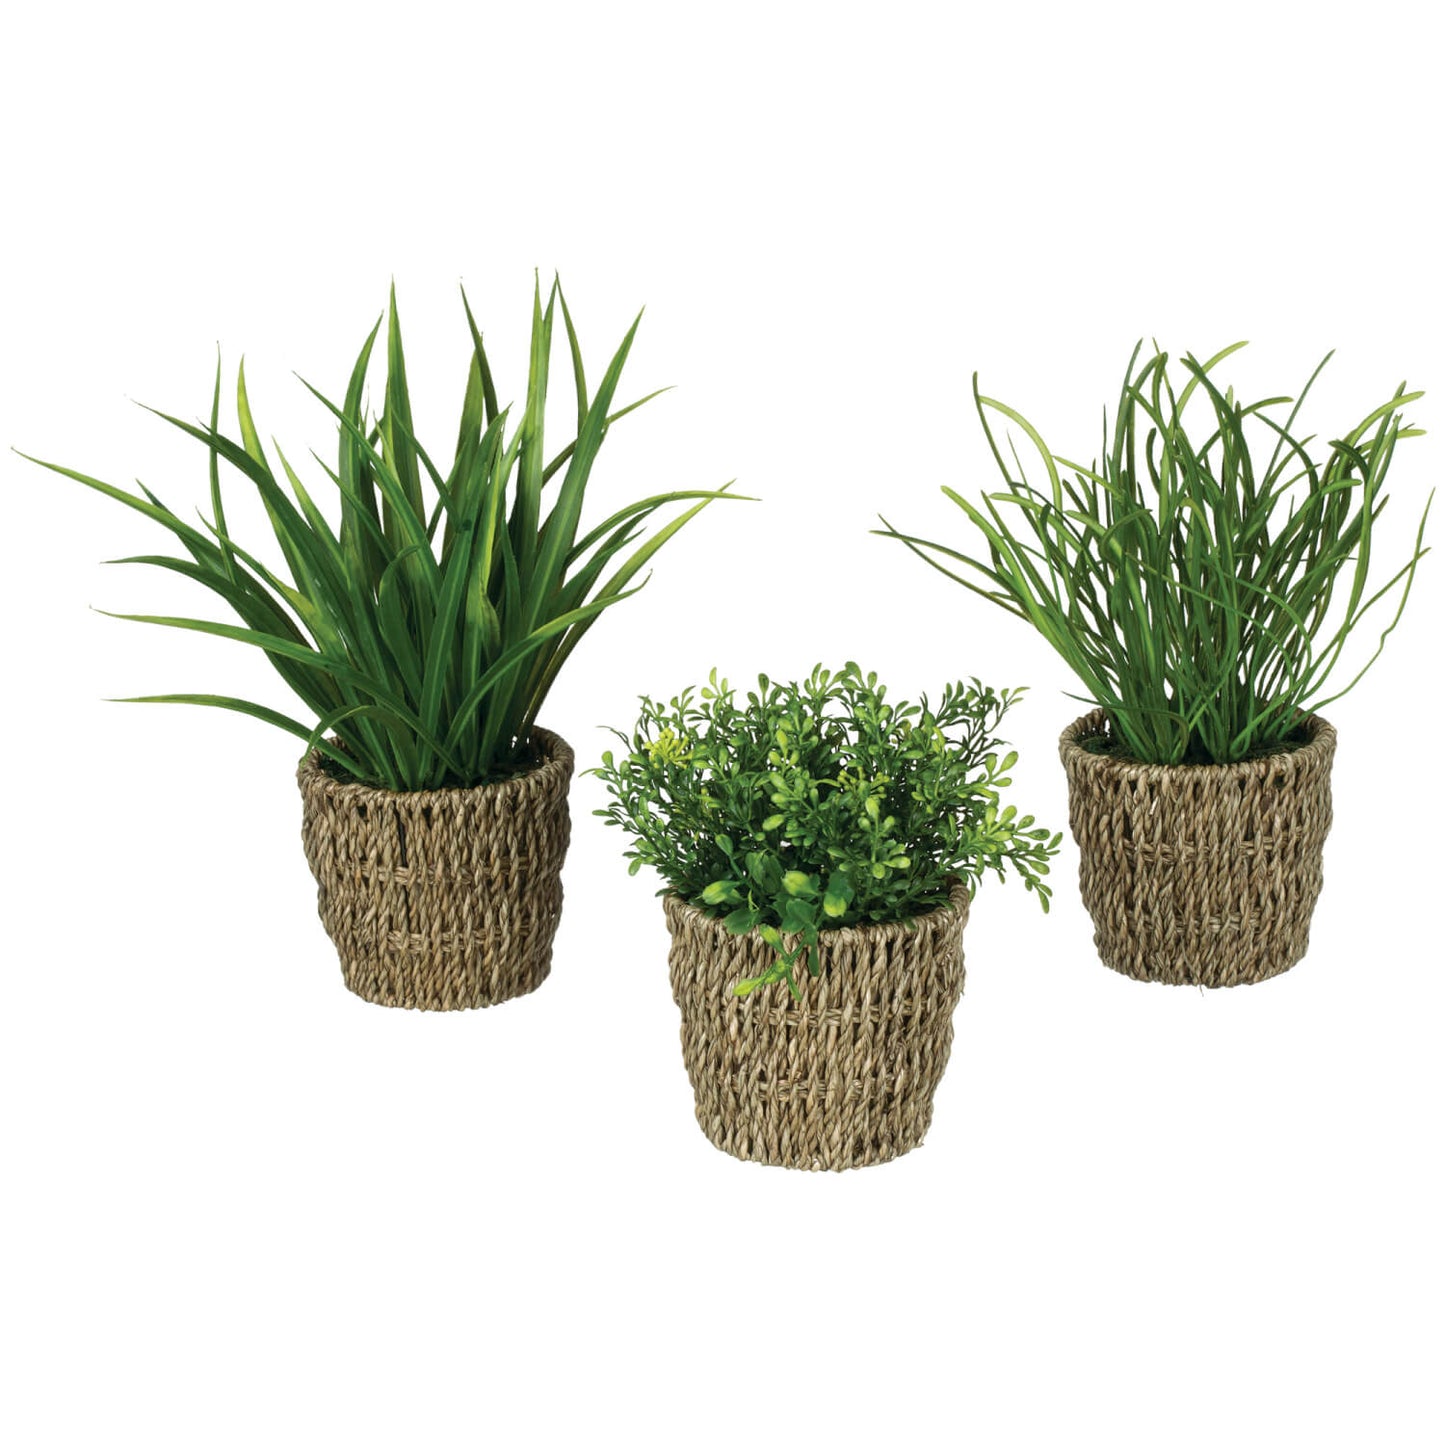 Foliage Plant in Basket